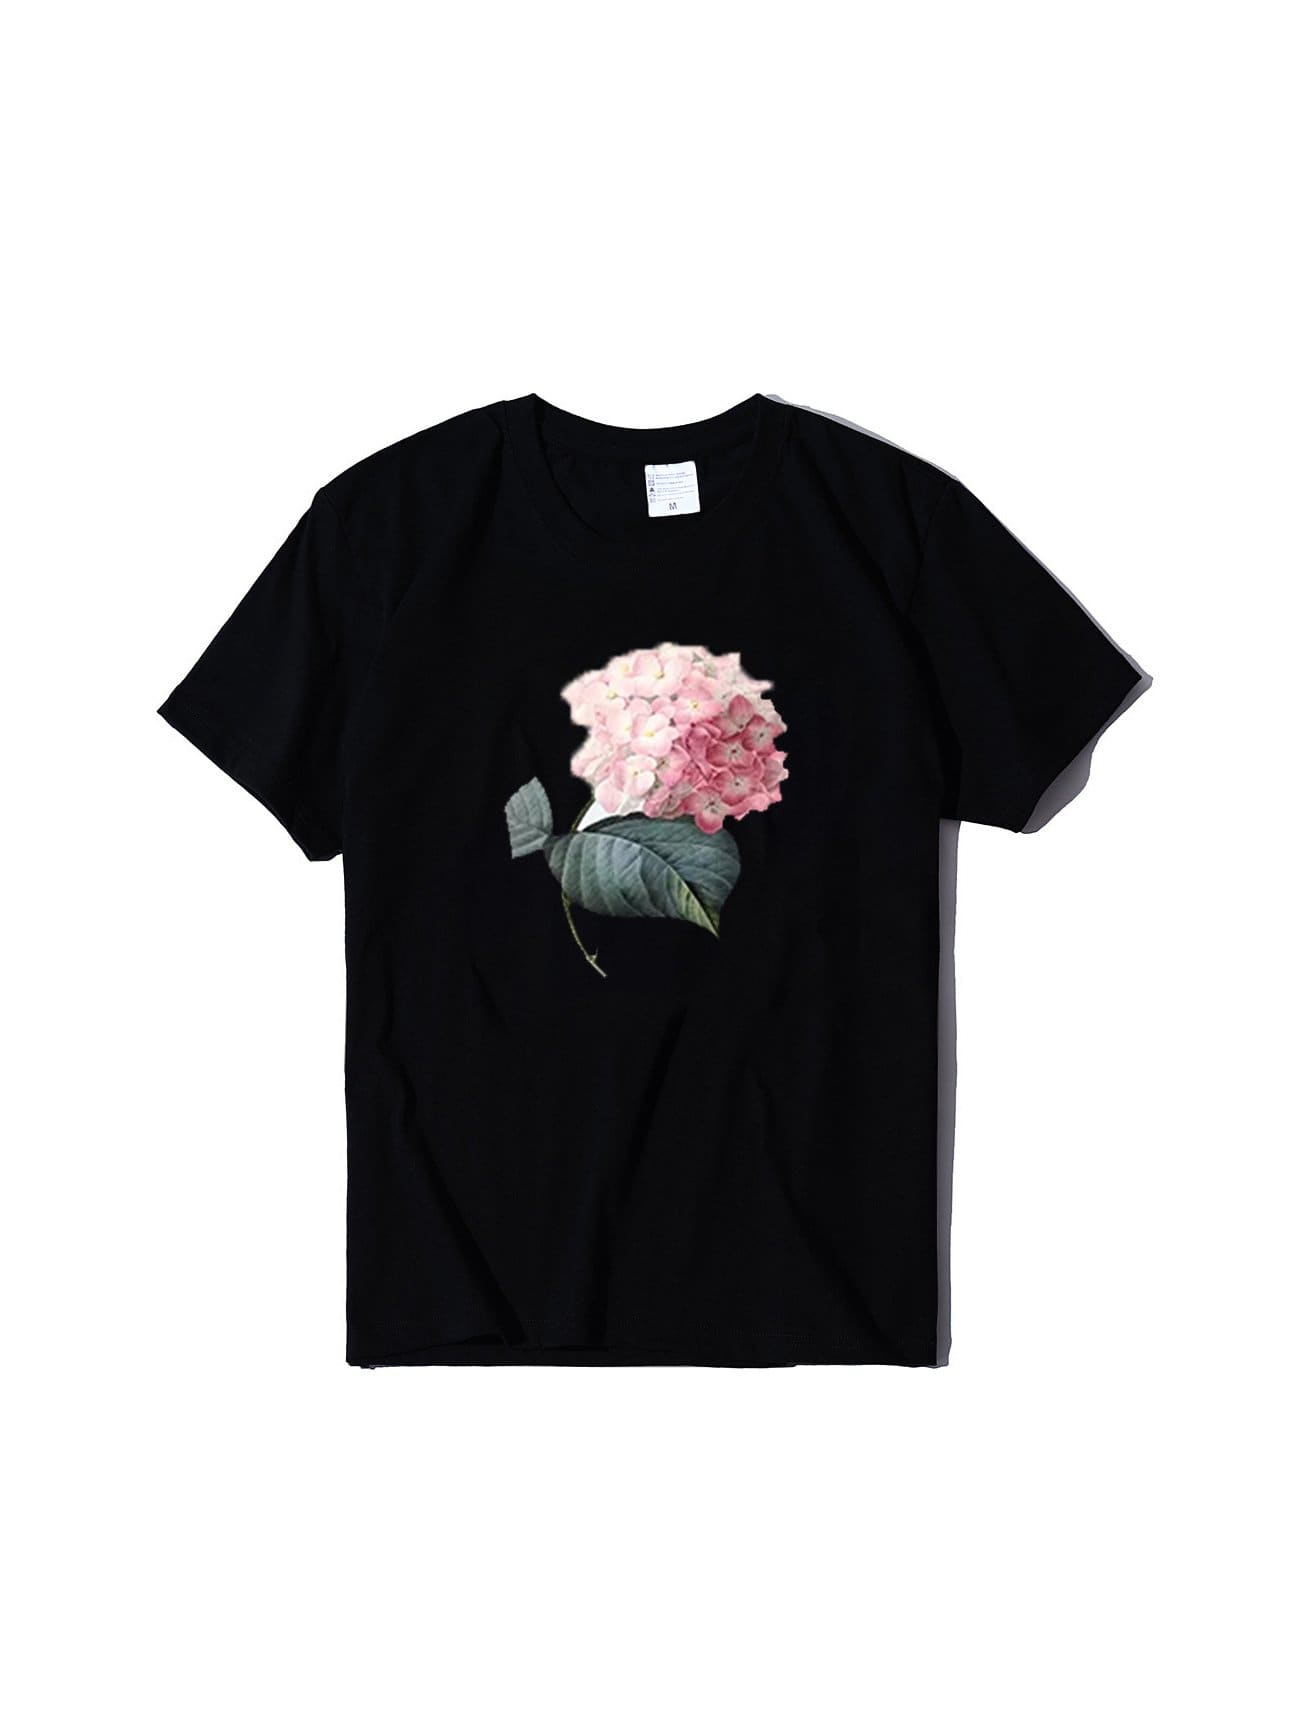 lovevop Crew Neck Printed Loose Summer T-Shirt Women